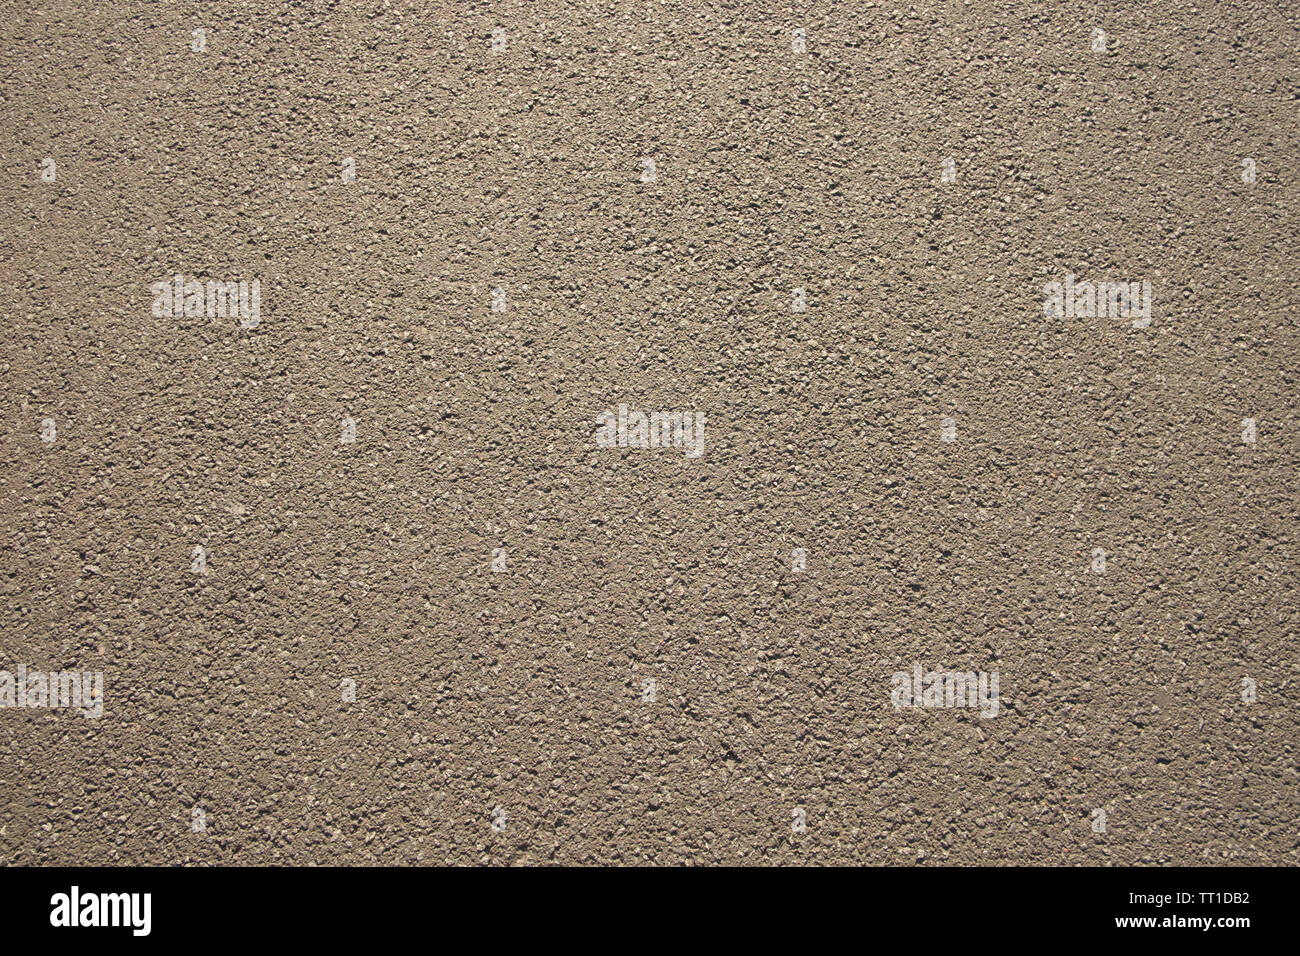 Close up of brown road surface à texture fine Banque D'Images